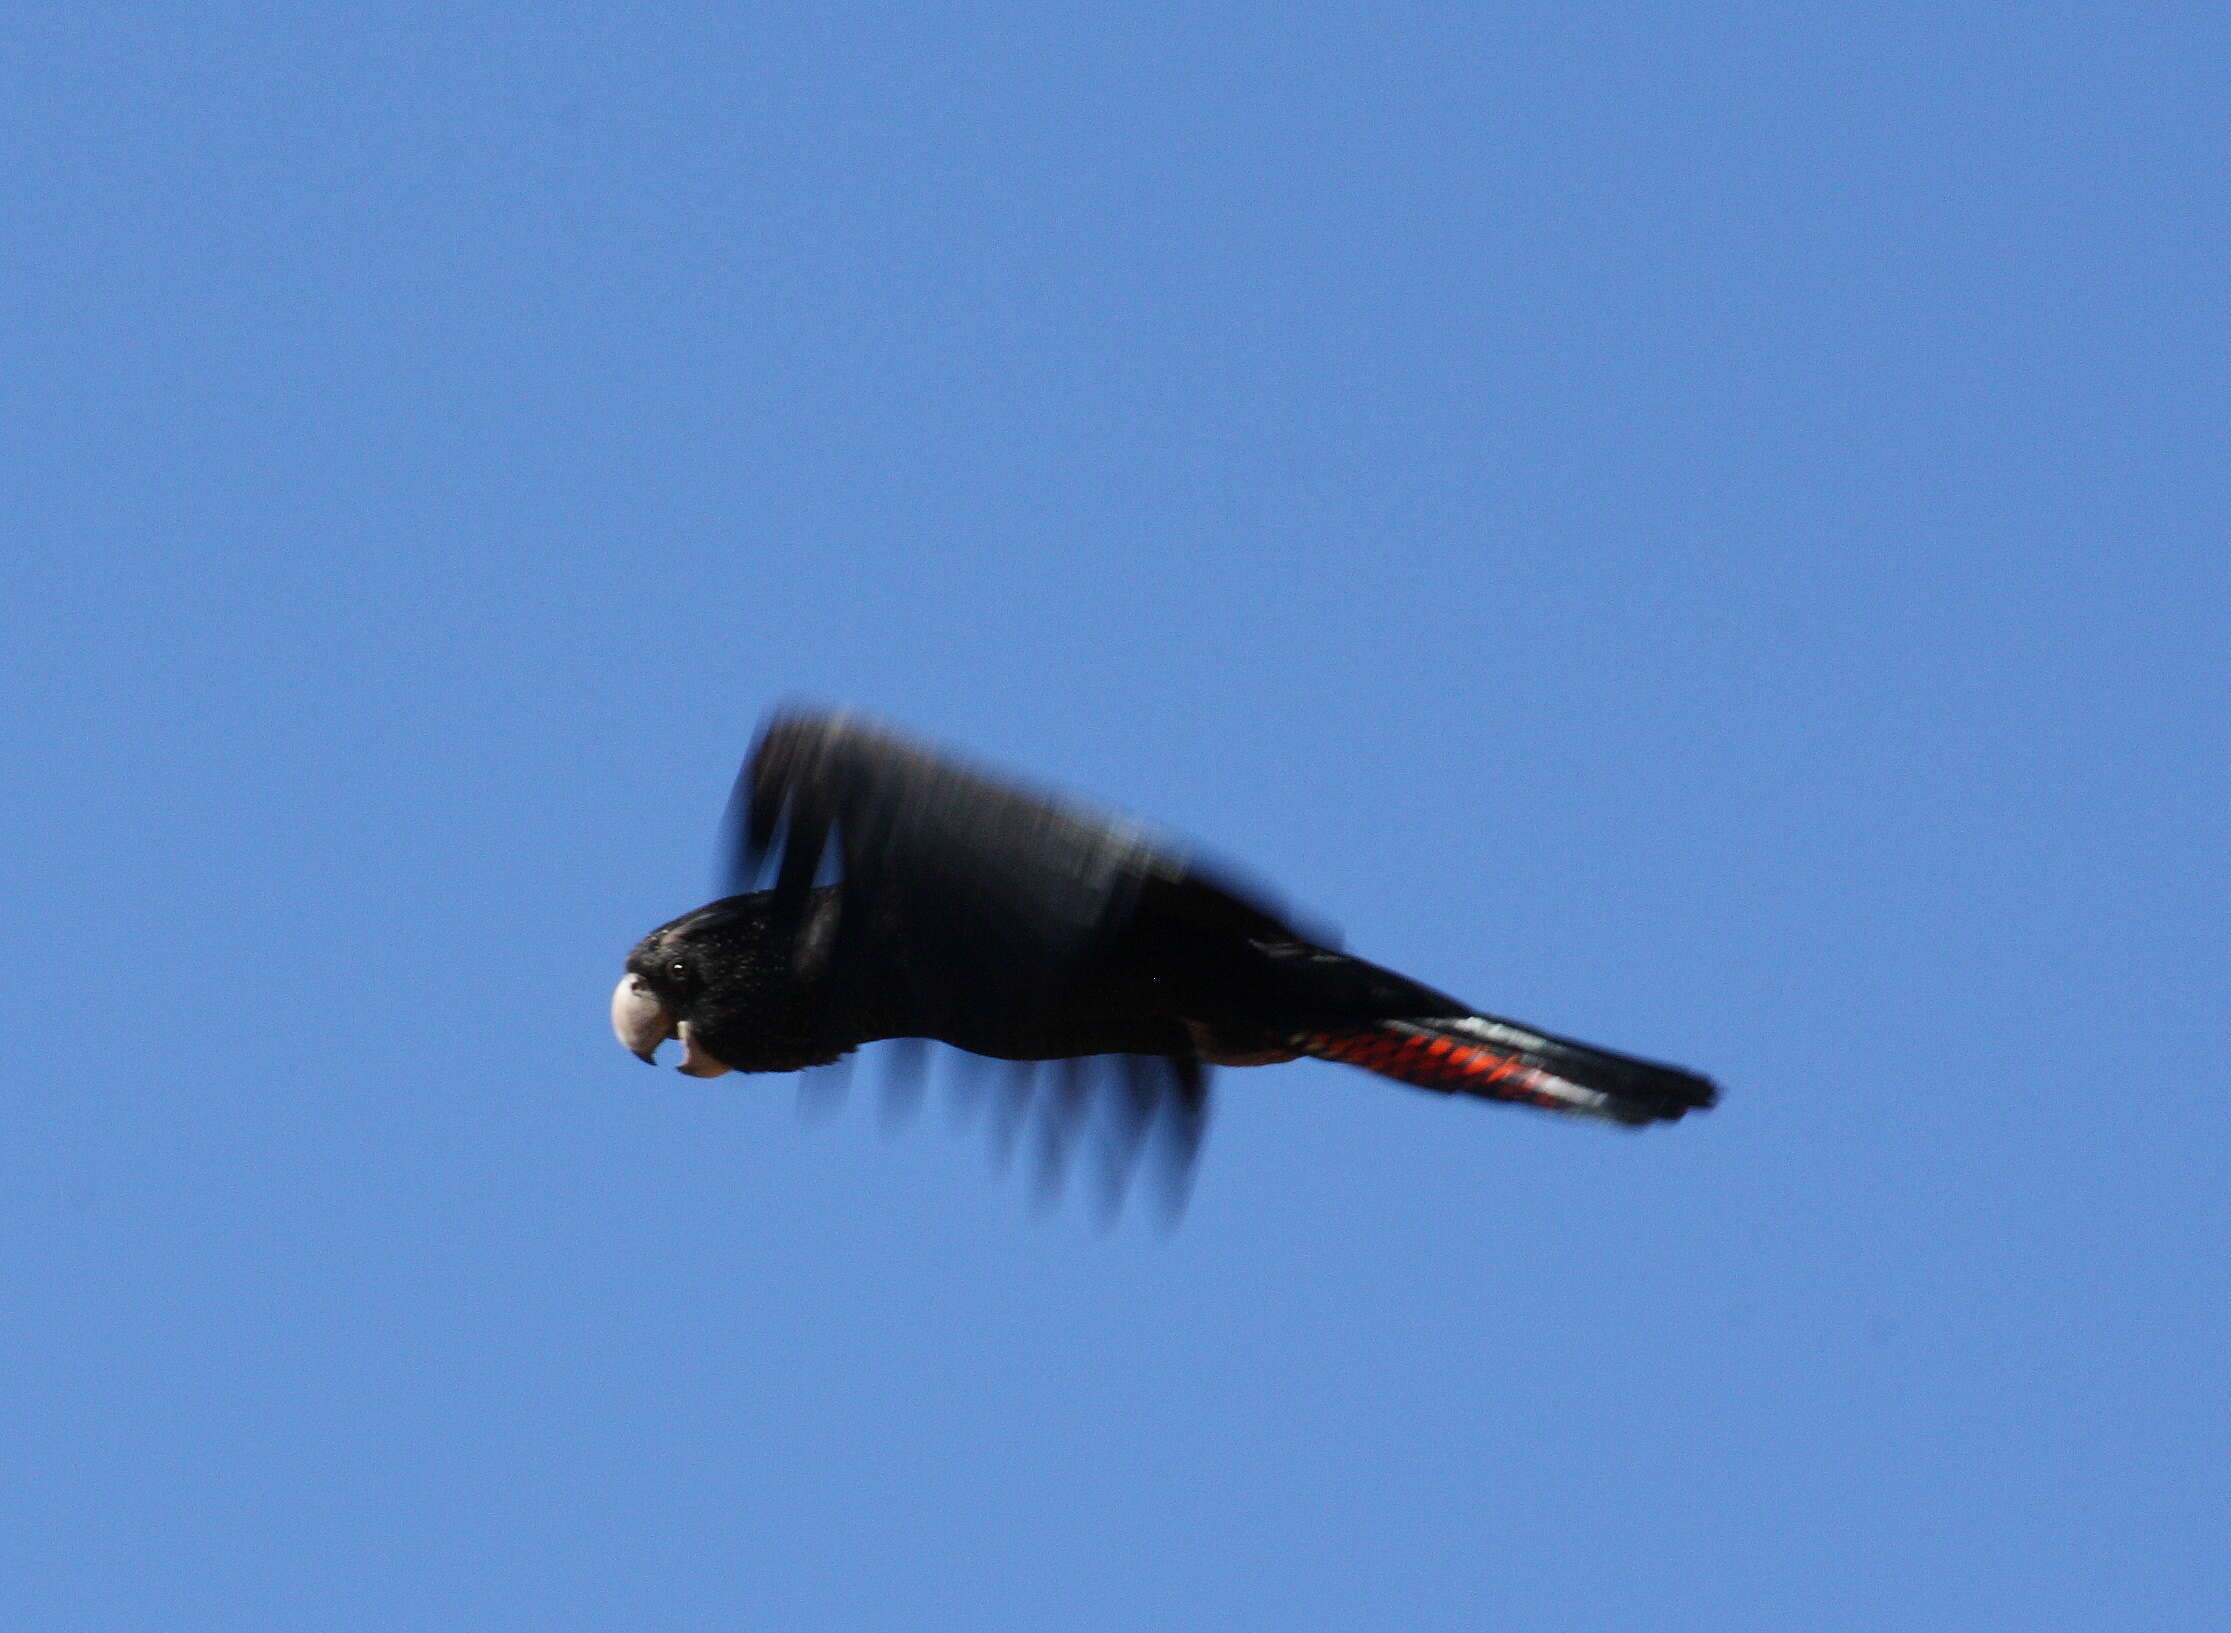 Image of cockatoos